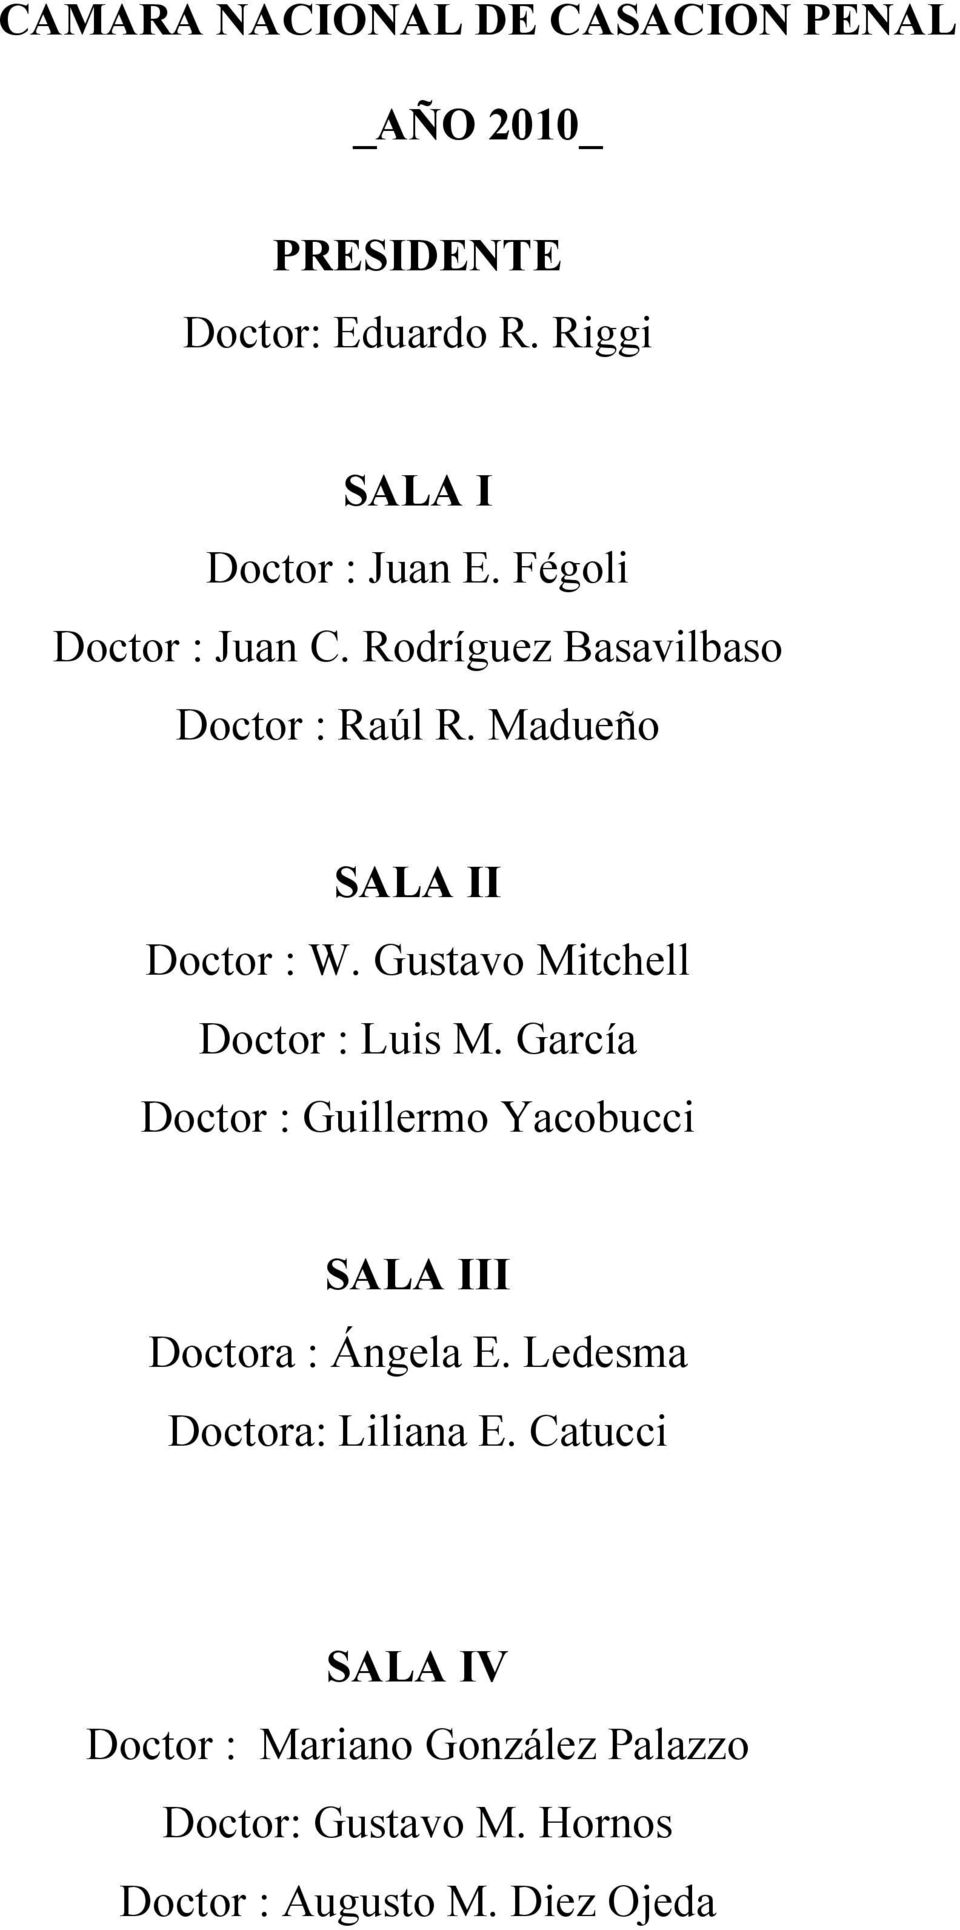 Gustavo Mitchell Doctor : Luis M. García Doctor : Guillermo Yacobucci SALA III Doctora : Ángela E.